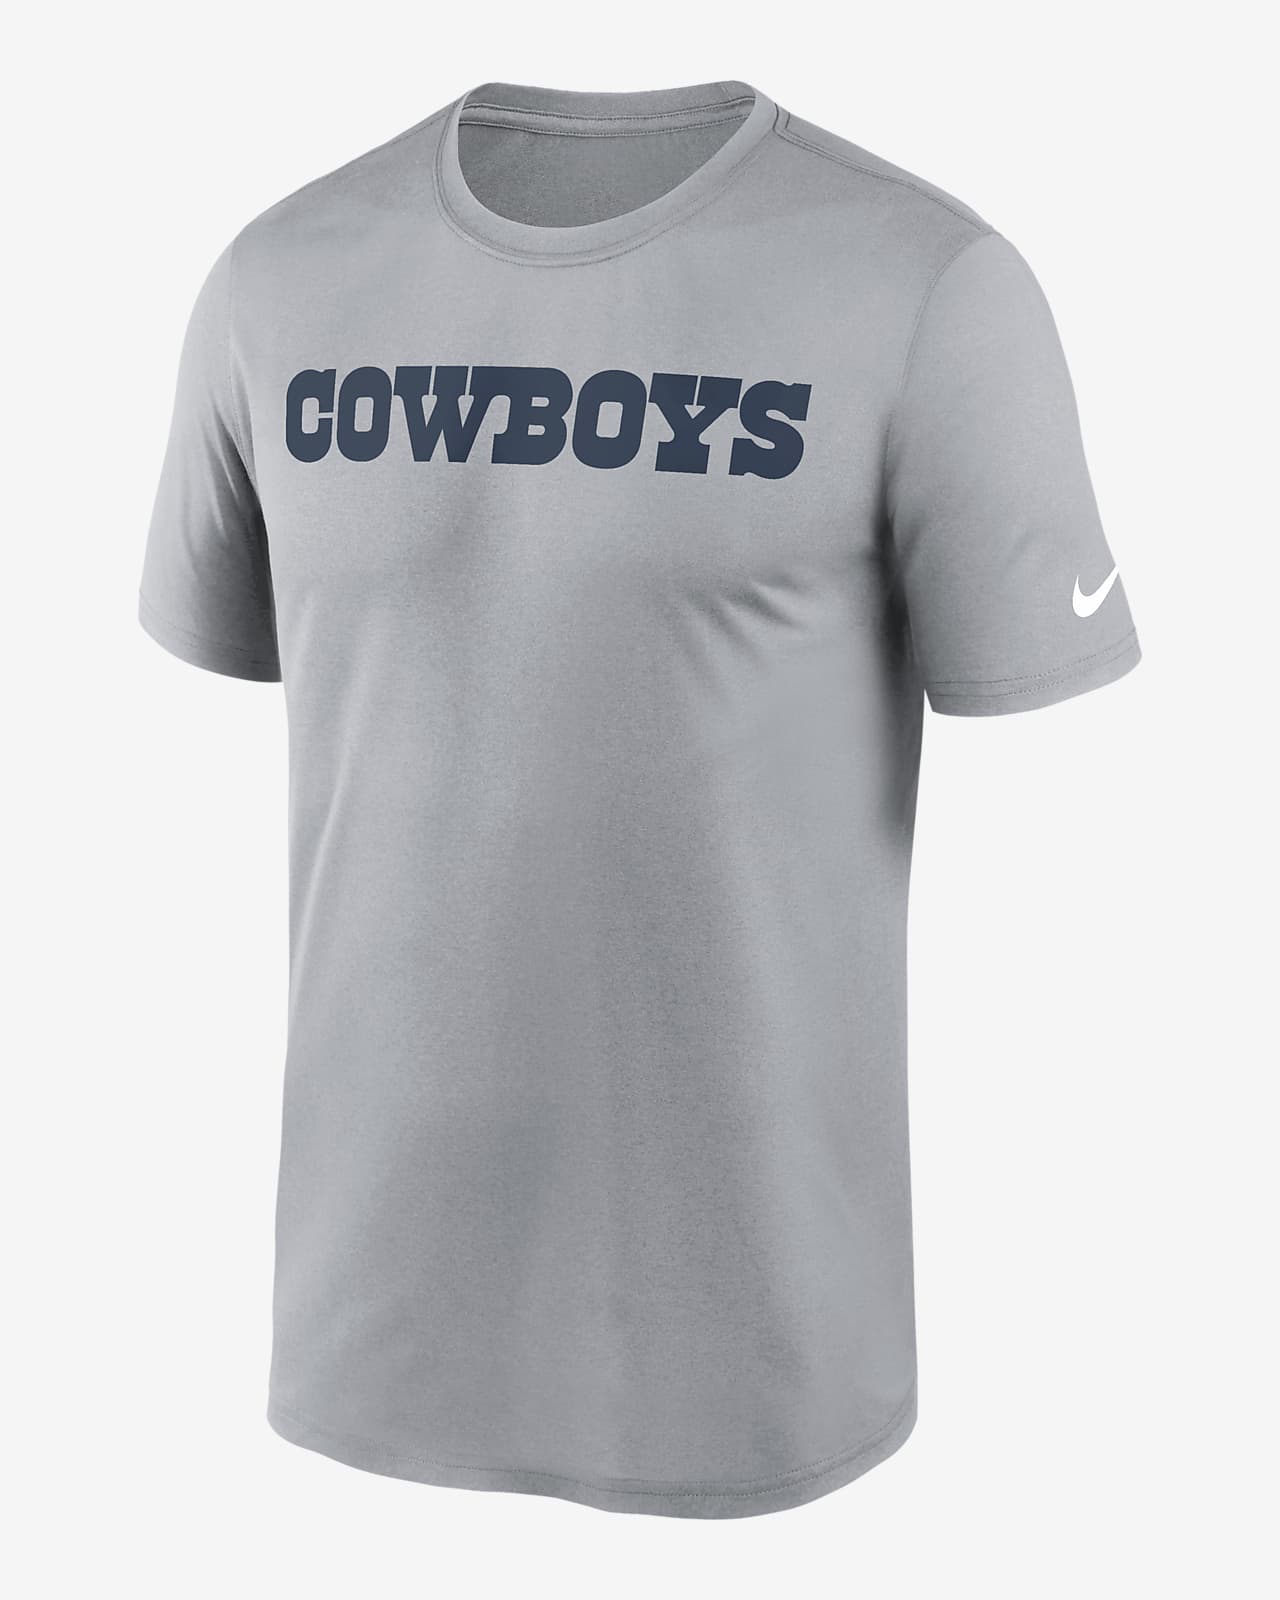 grey cowboys shirt